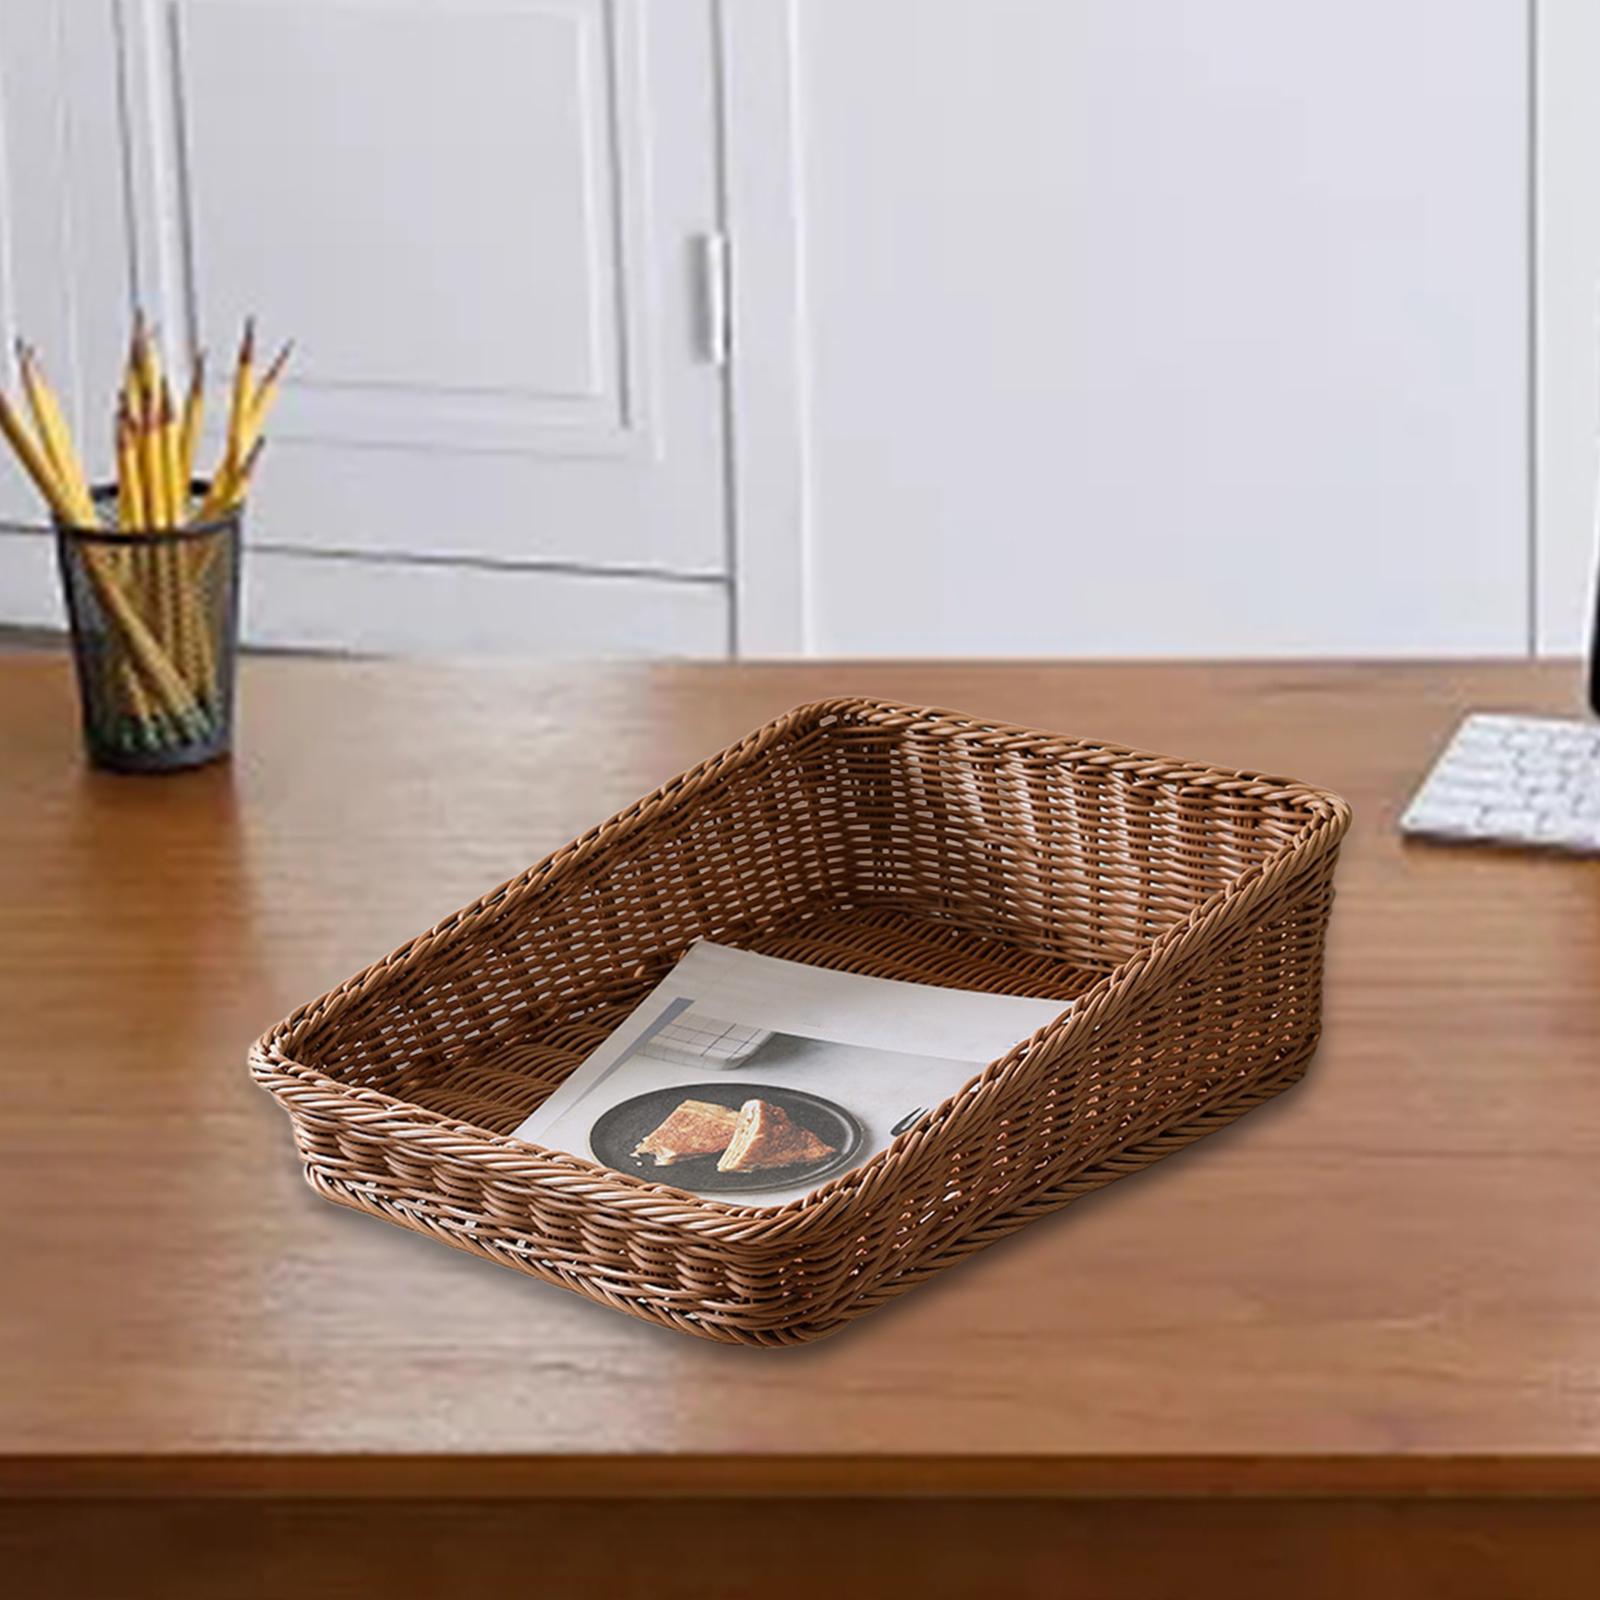 Woven Bread Basket Decor Fruit Basket for Living Room Dining Room Restaurant Vertical Version